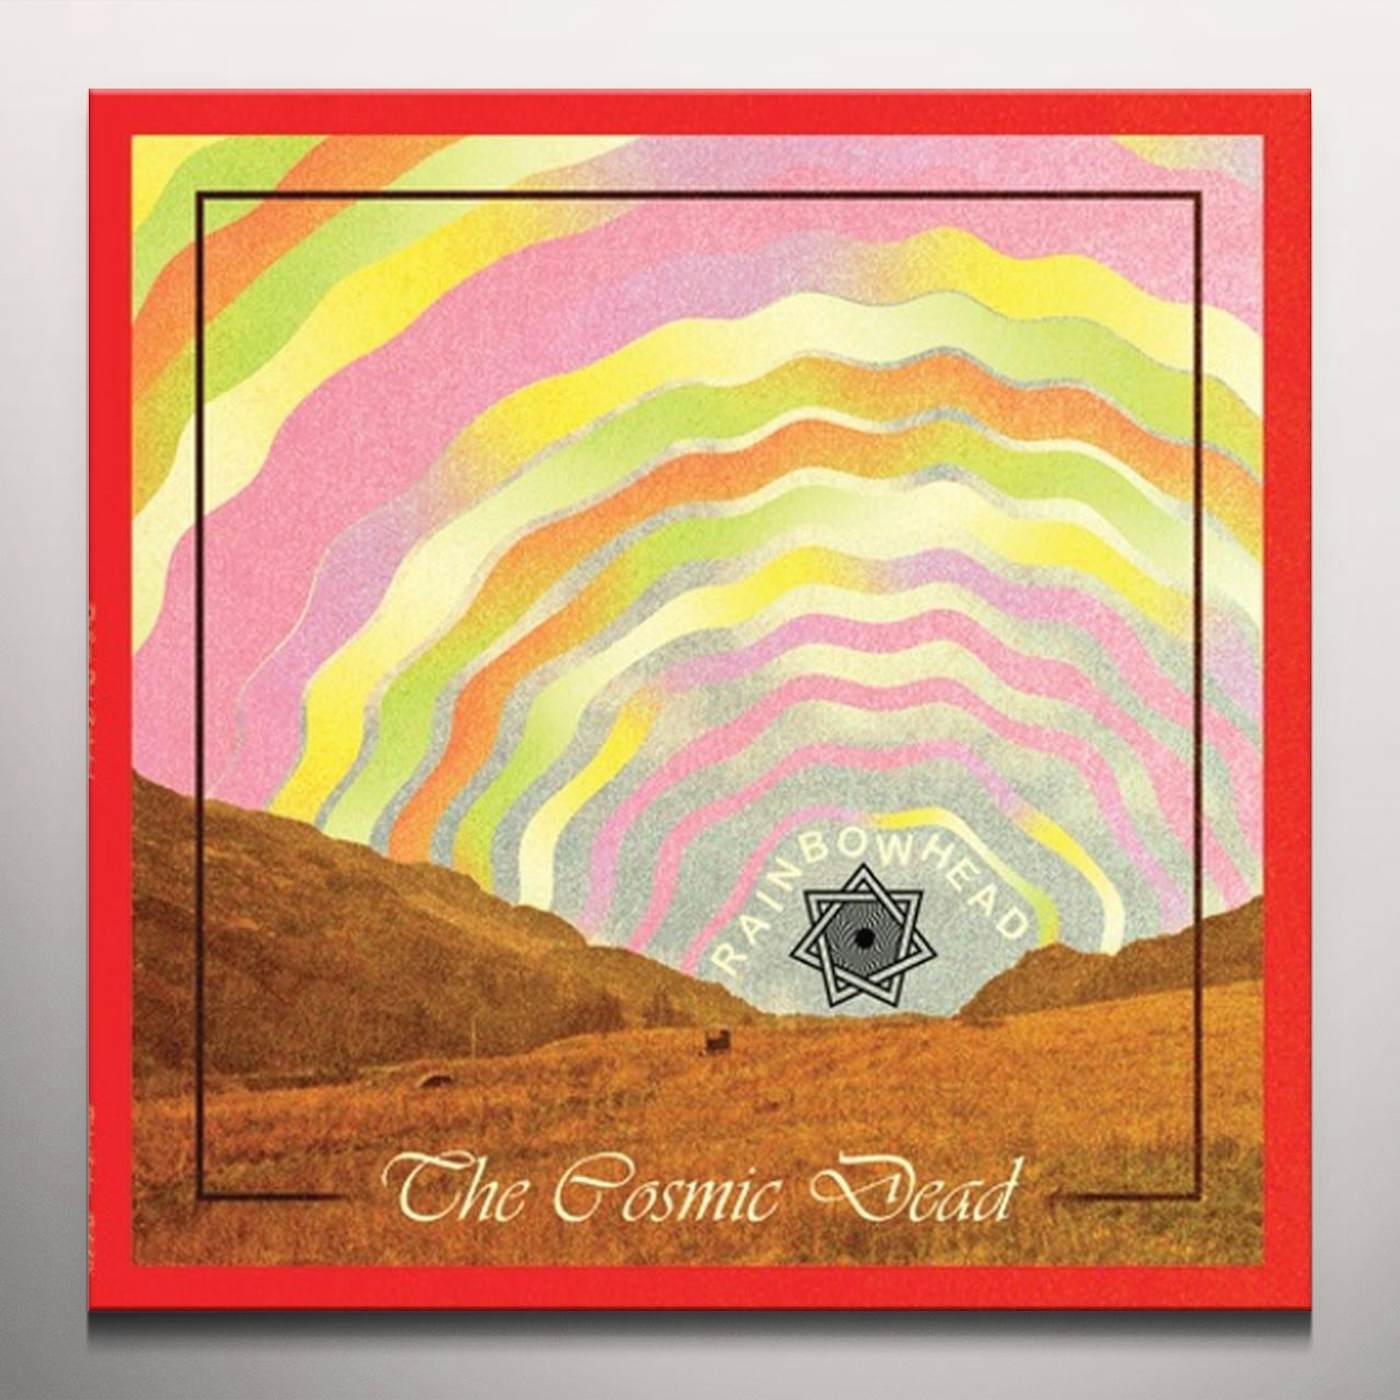 The Cosmic Dead Rainbowhead Vinyl Record